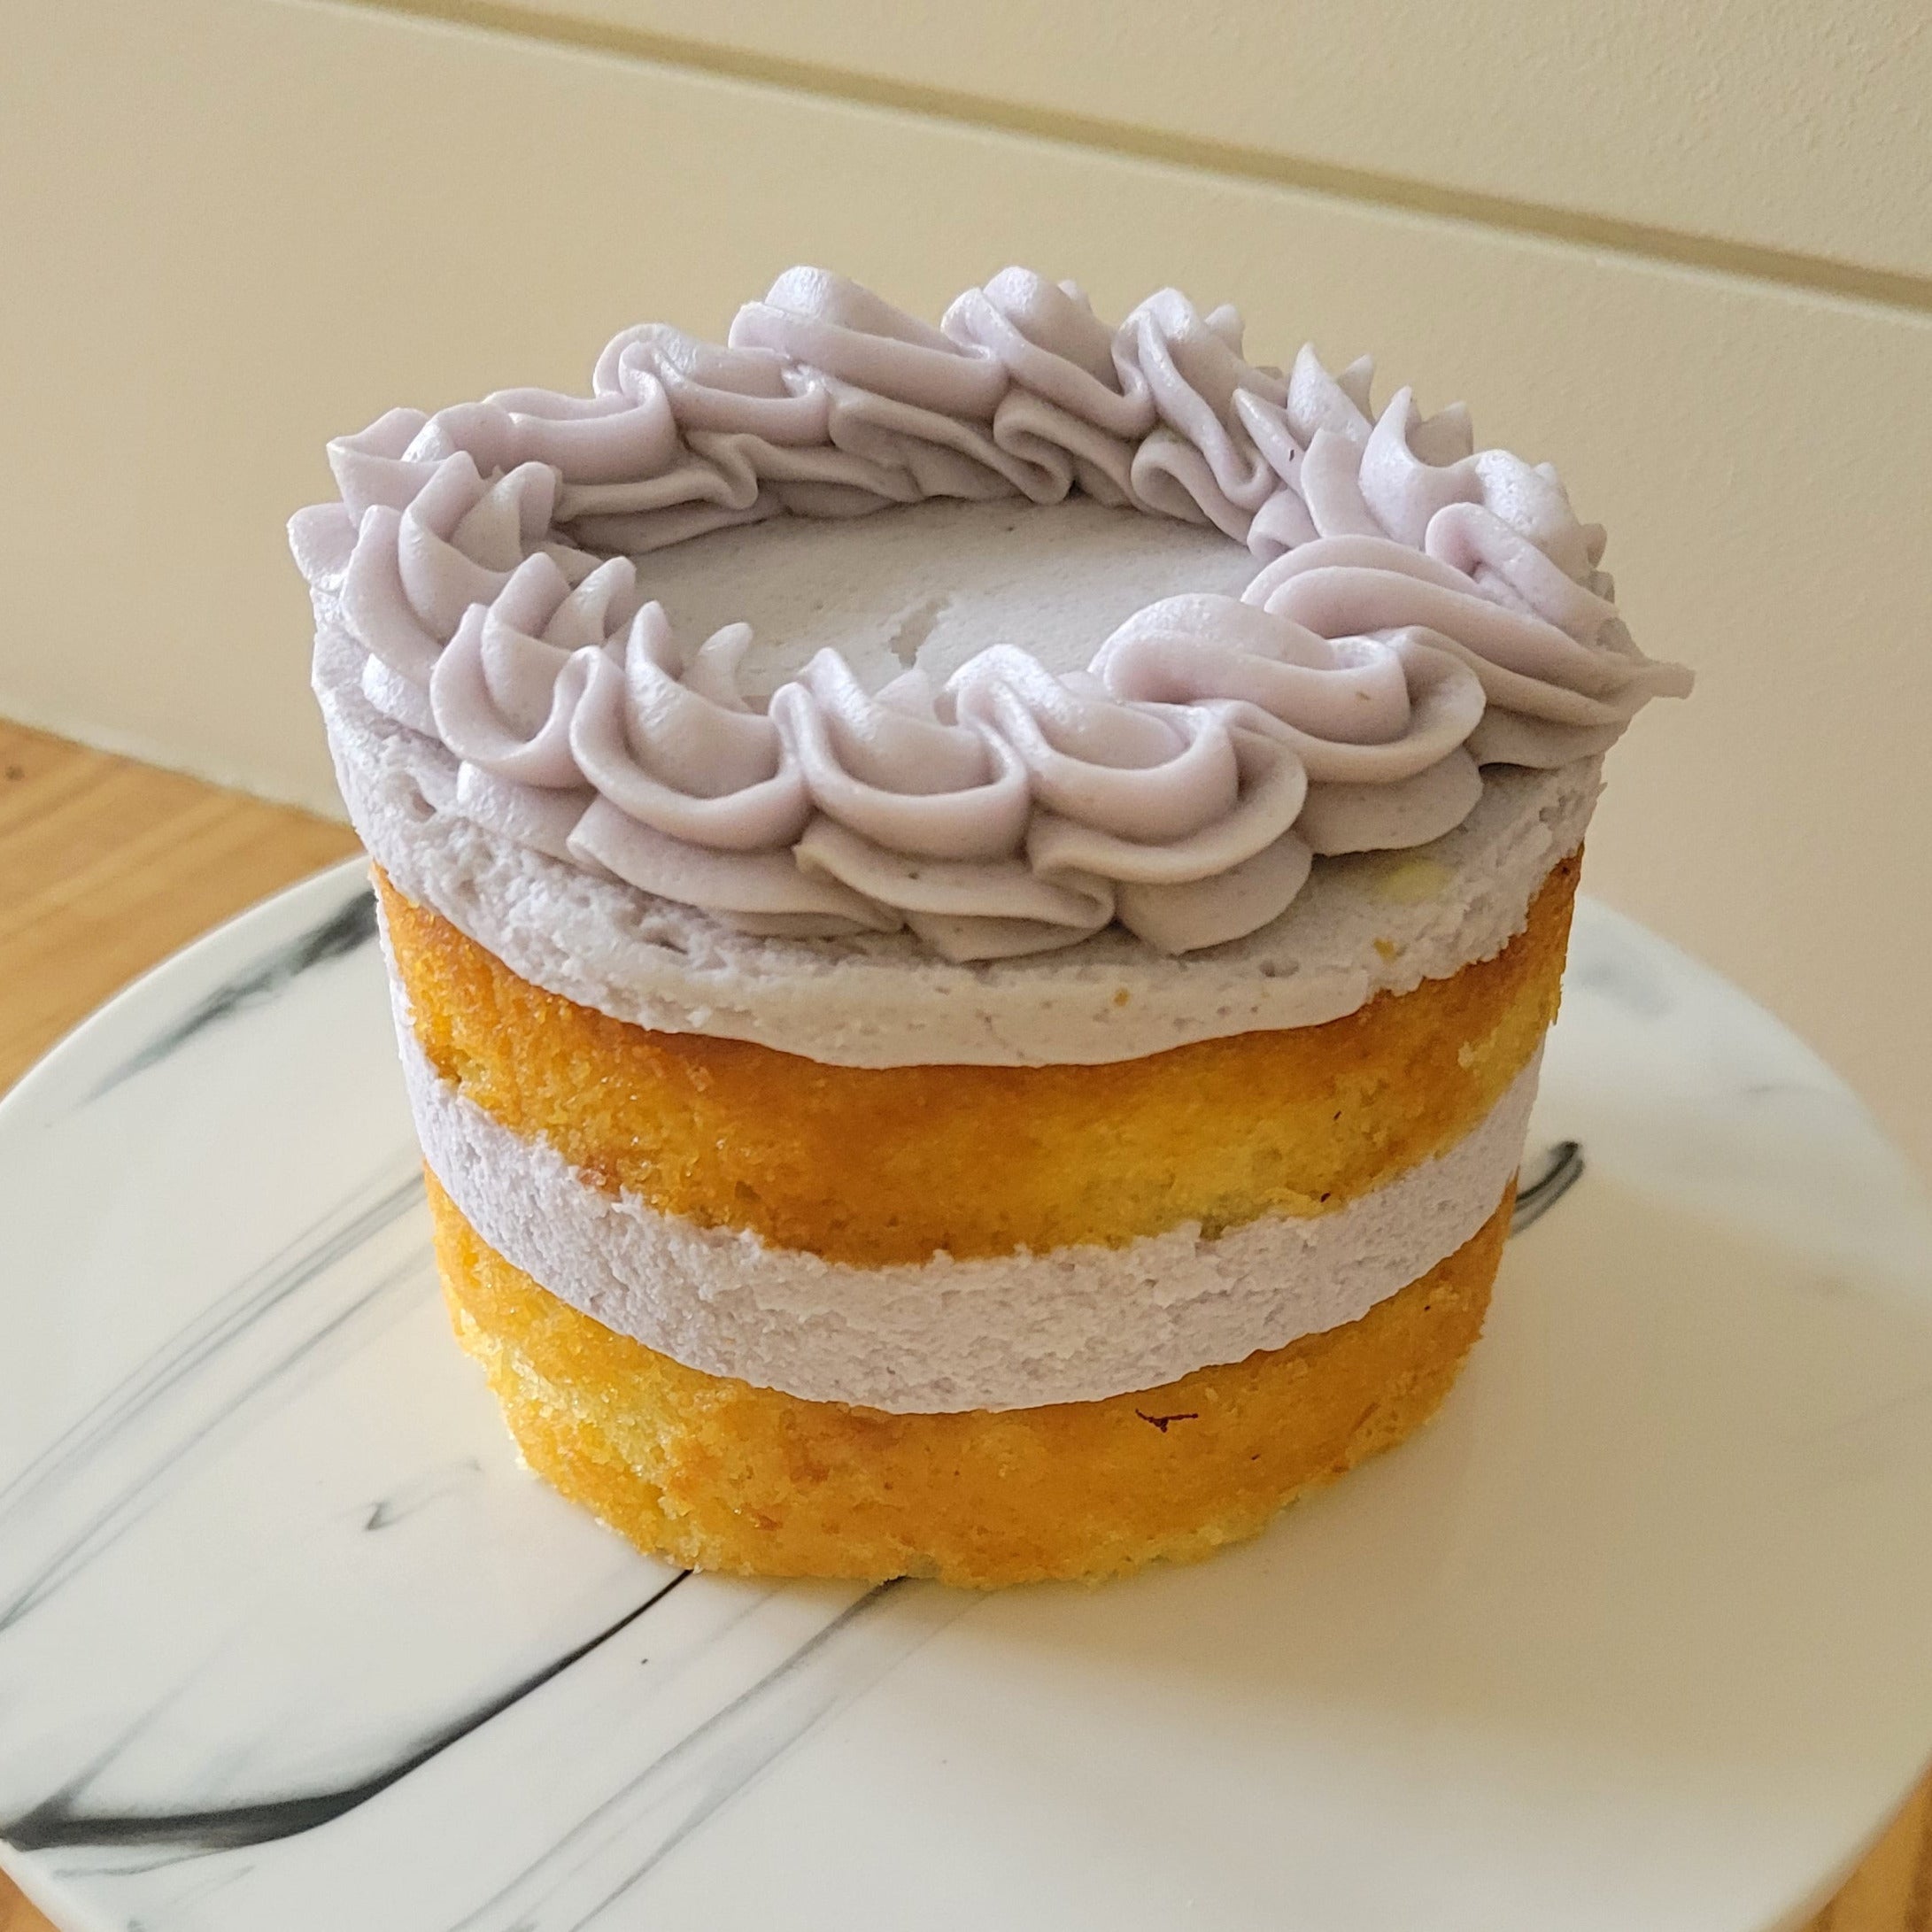 Blackberry Lavender Cake (4 inches)